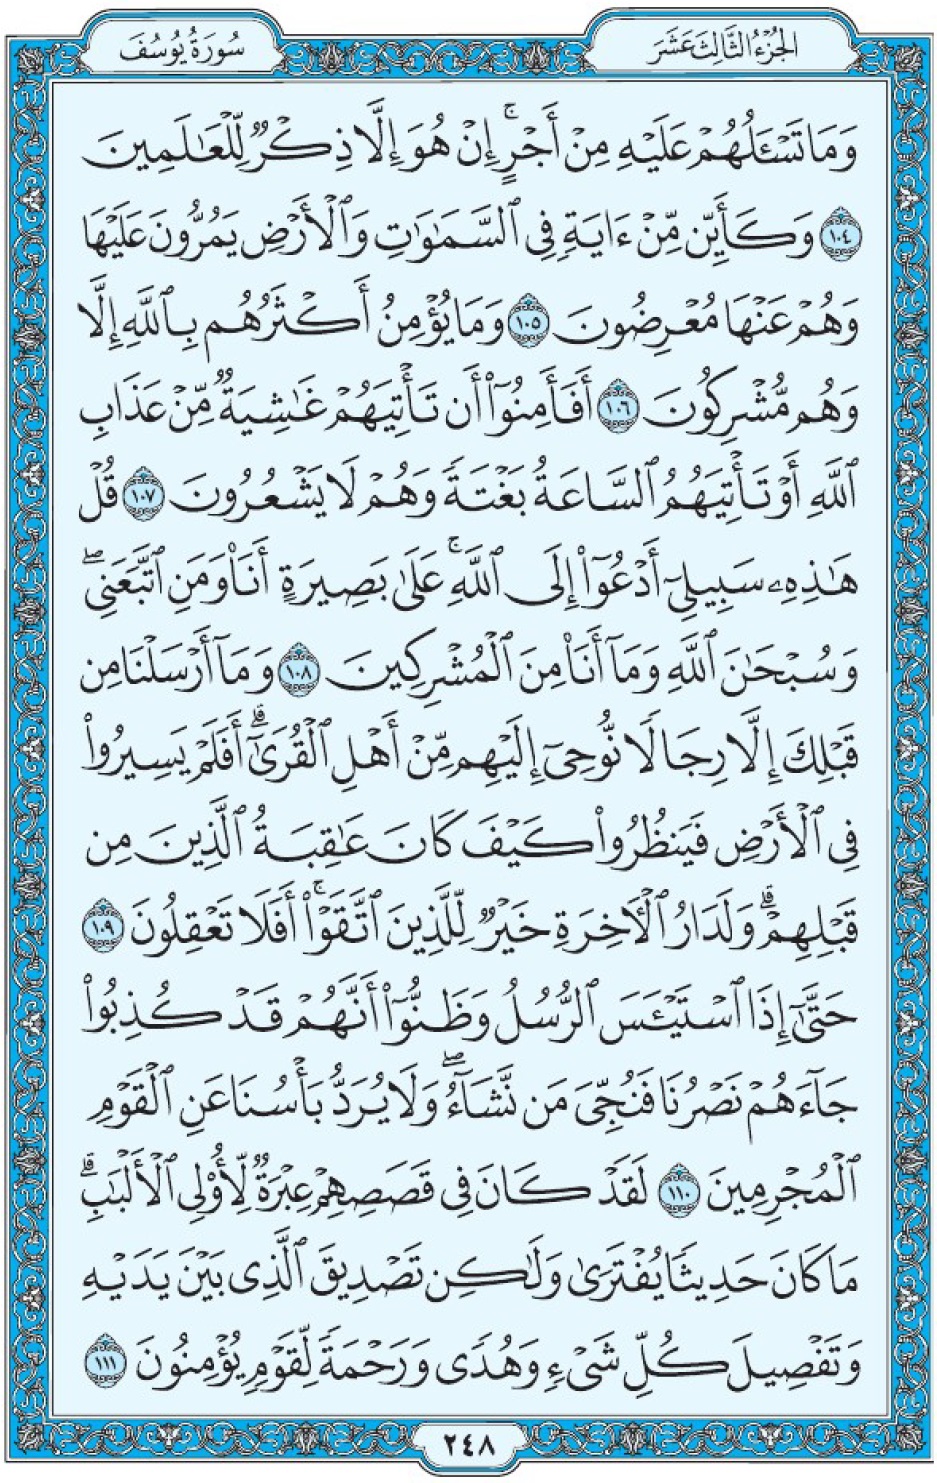 Коран Мединский мусхаф страница 248, Юсуф, аят 104-111